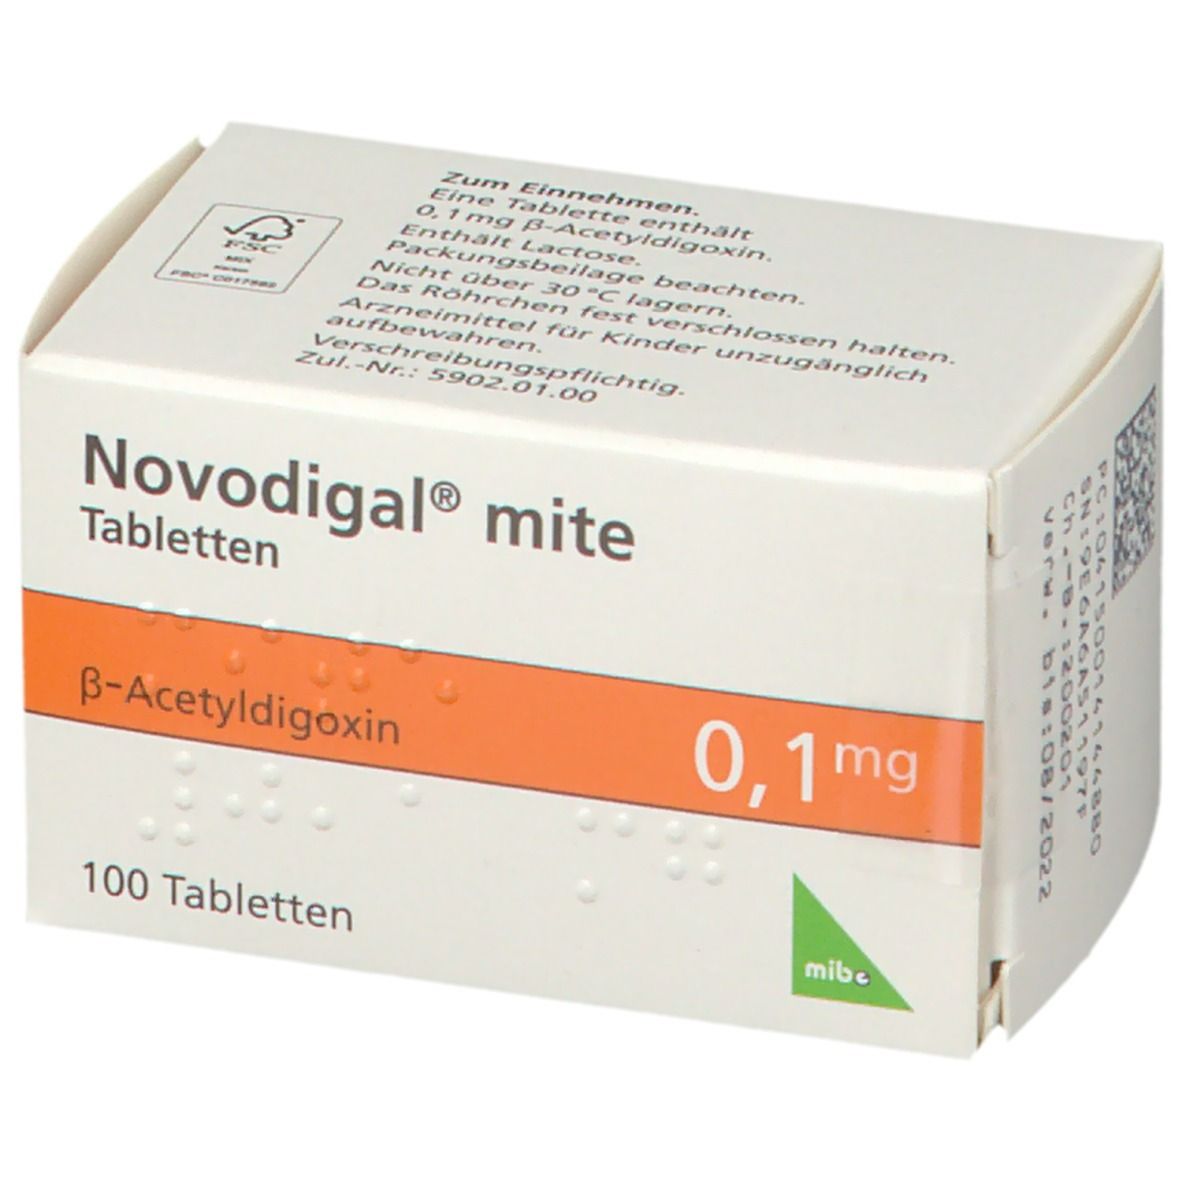 Novodigal® mite 0,1 mg